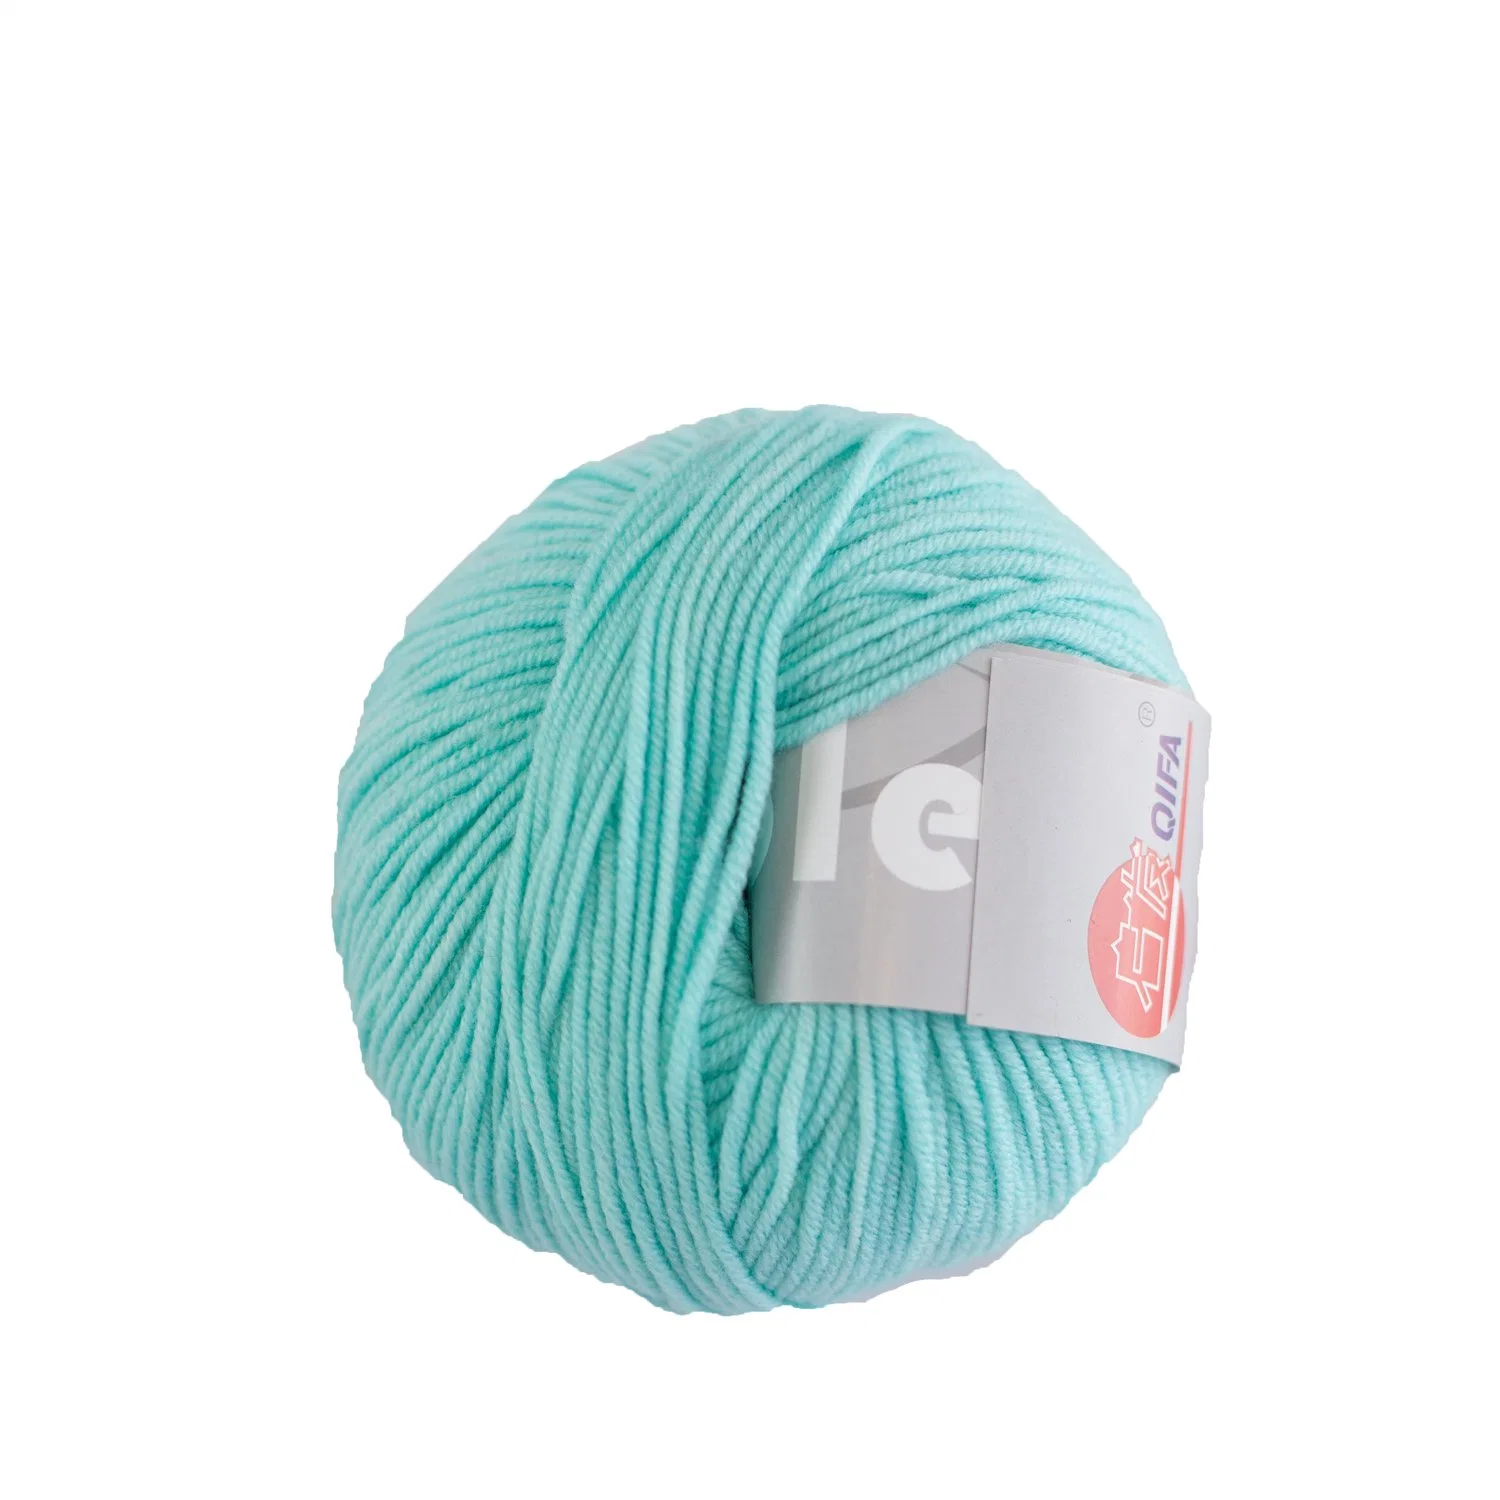 Factory Wholesales Pure Cotton Knitting Yarn 100% Cotton Yarn Hand Knitting Acrylic Yarn for Crochet